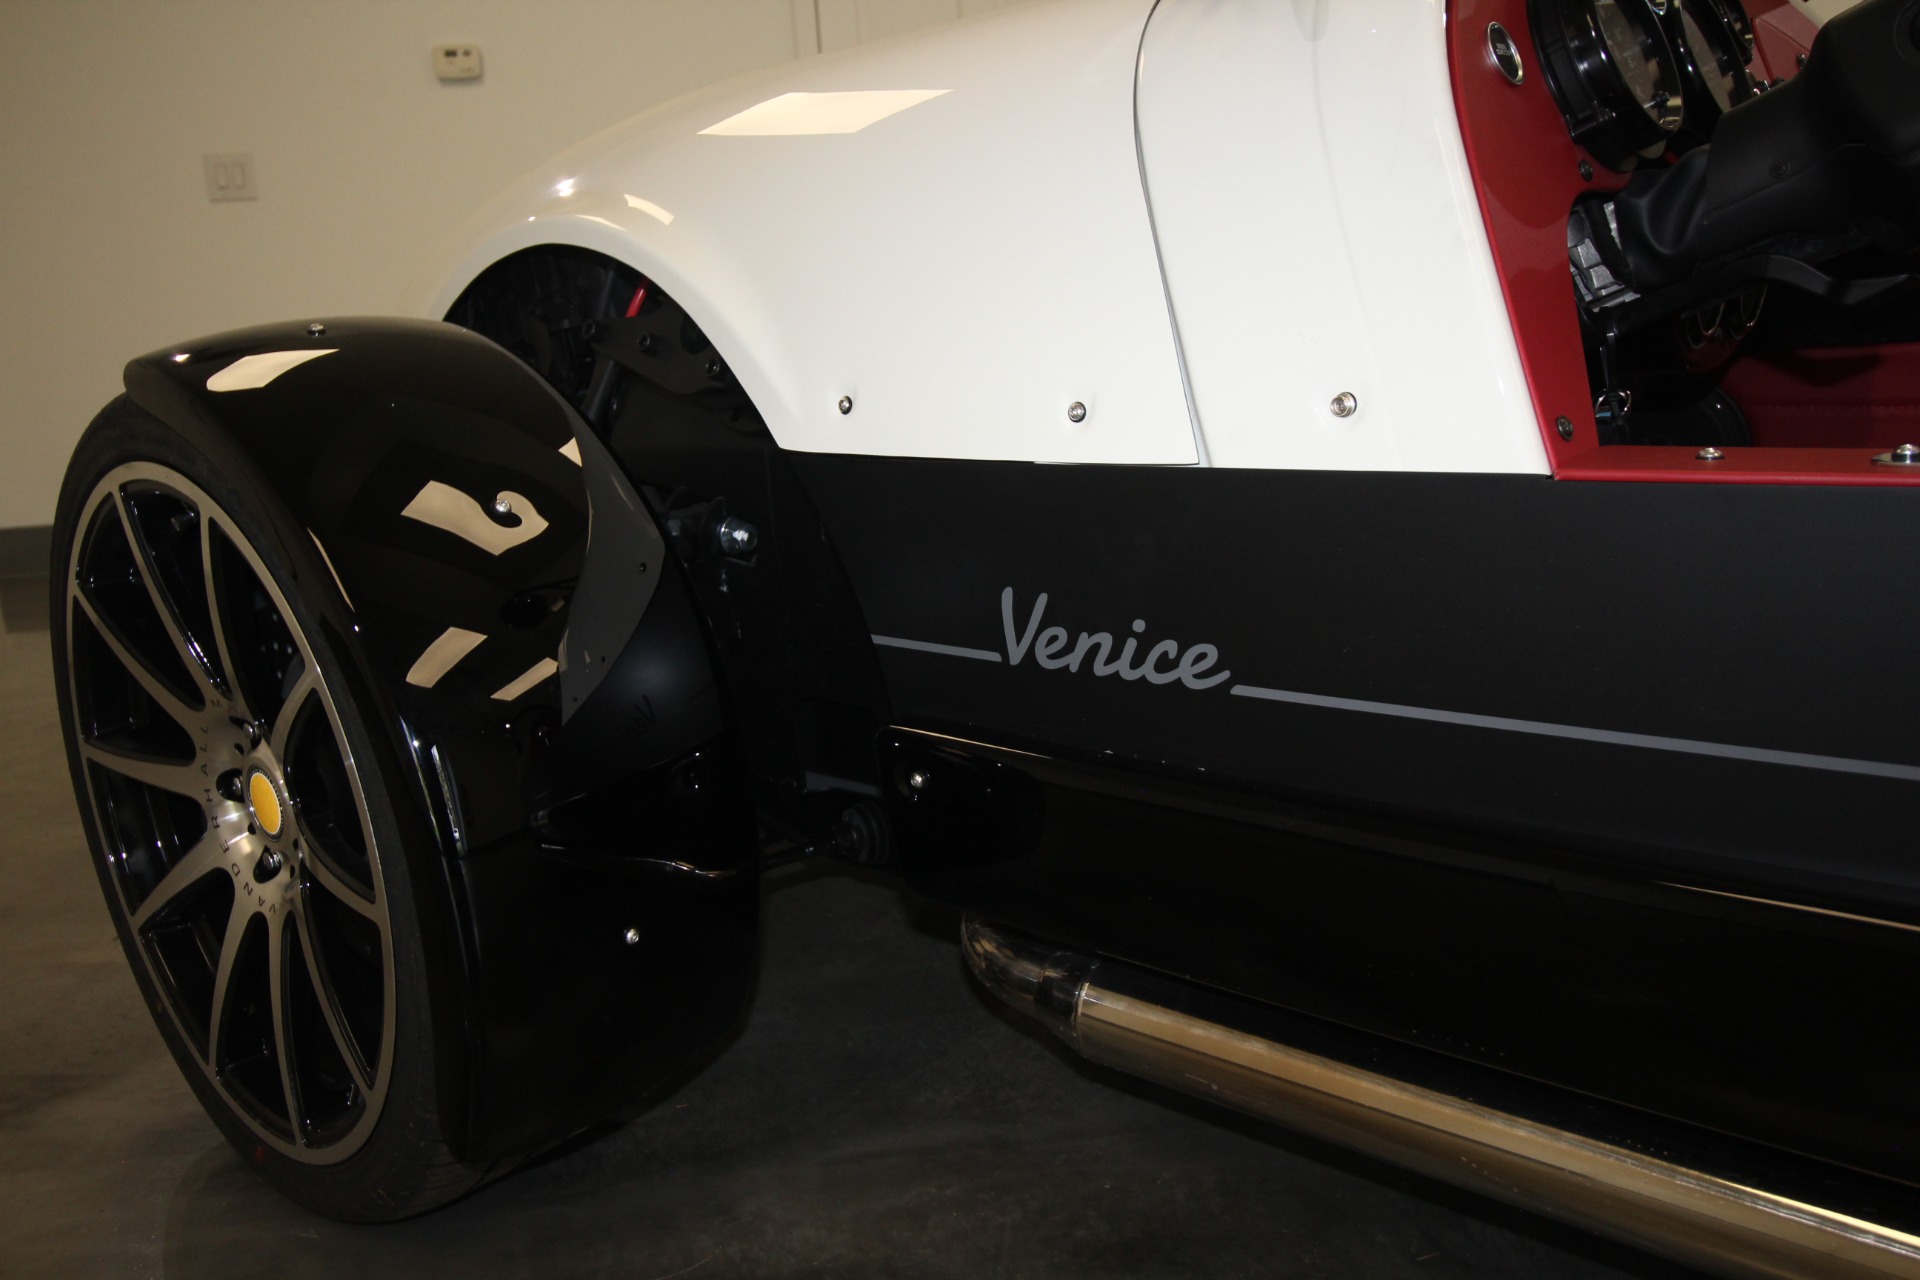 New 2023 Ivory White Vanderhall Venice GTS Last of the Venices to be made | Albany, NY